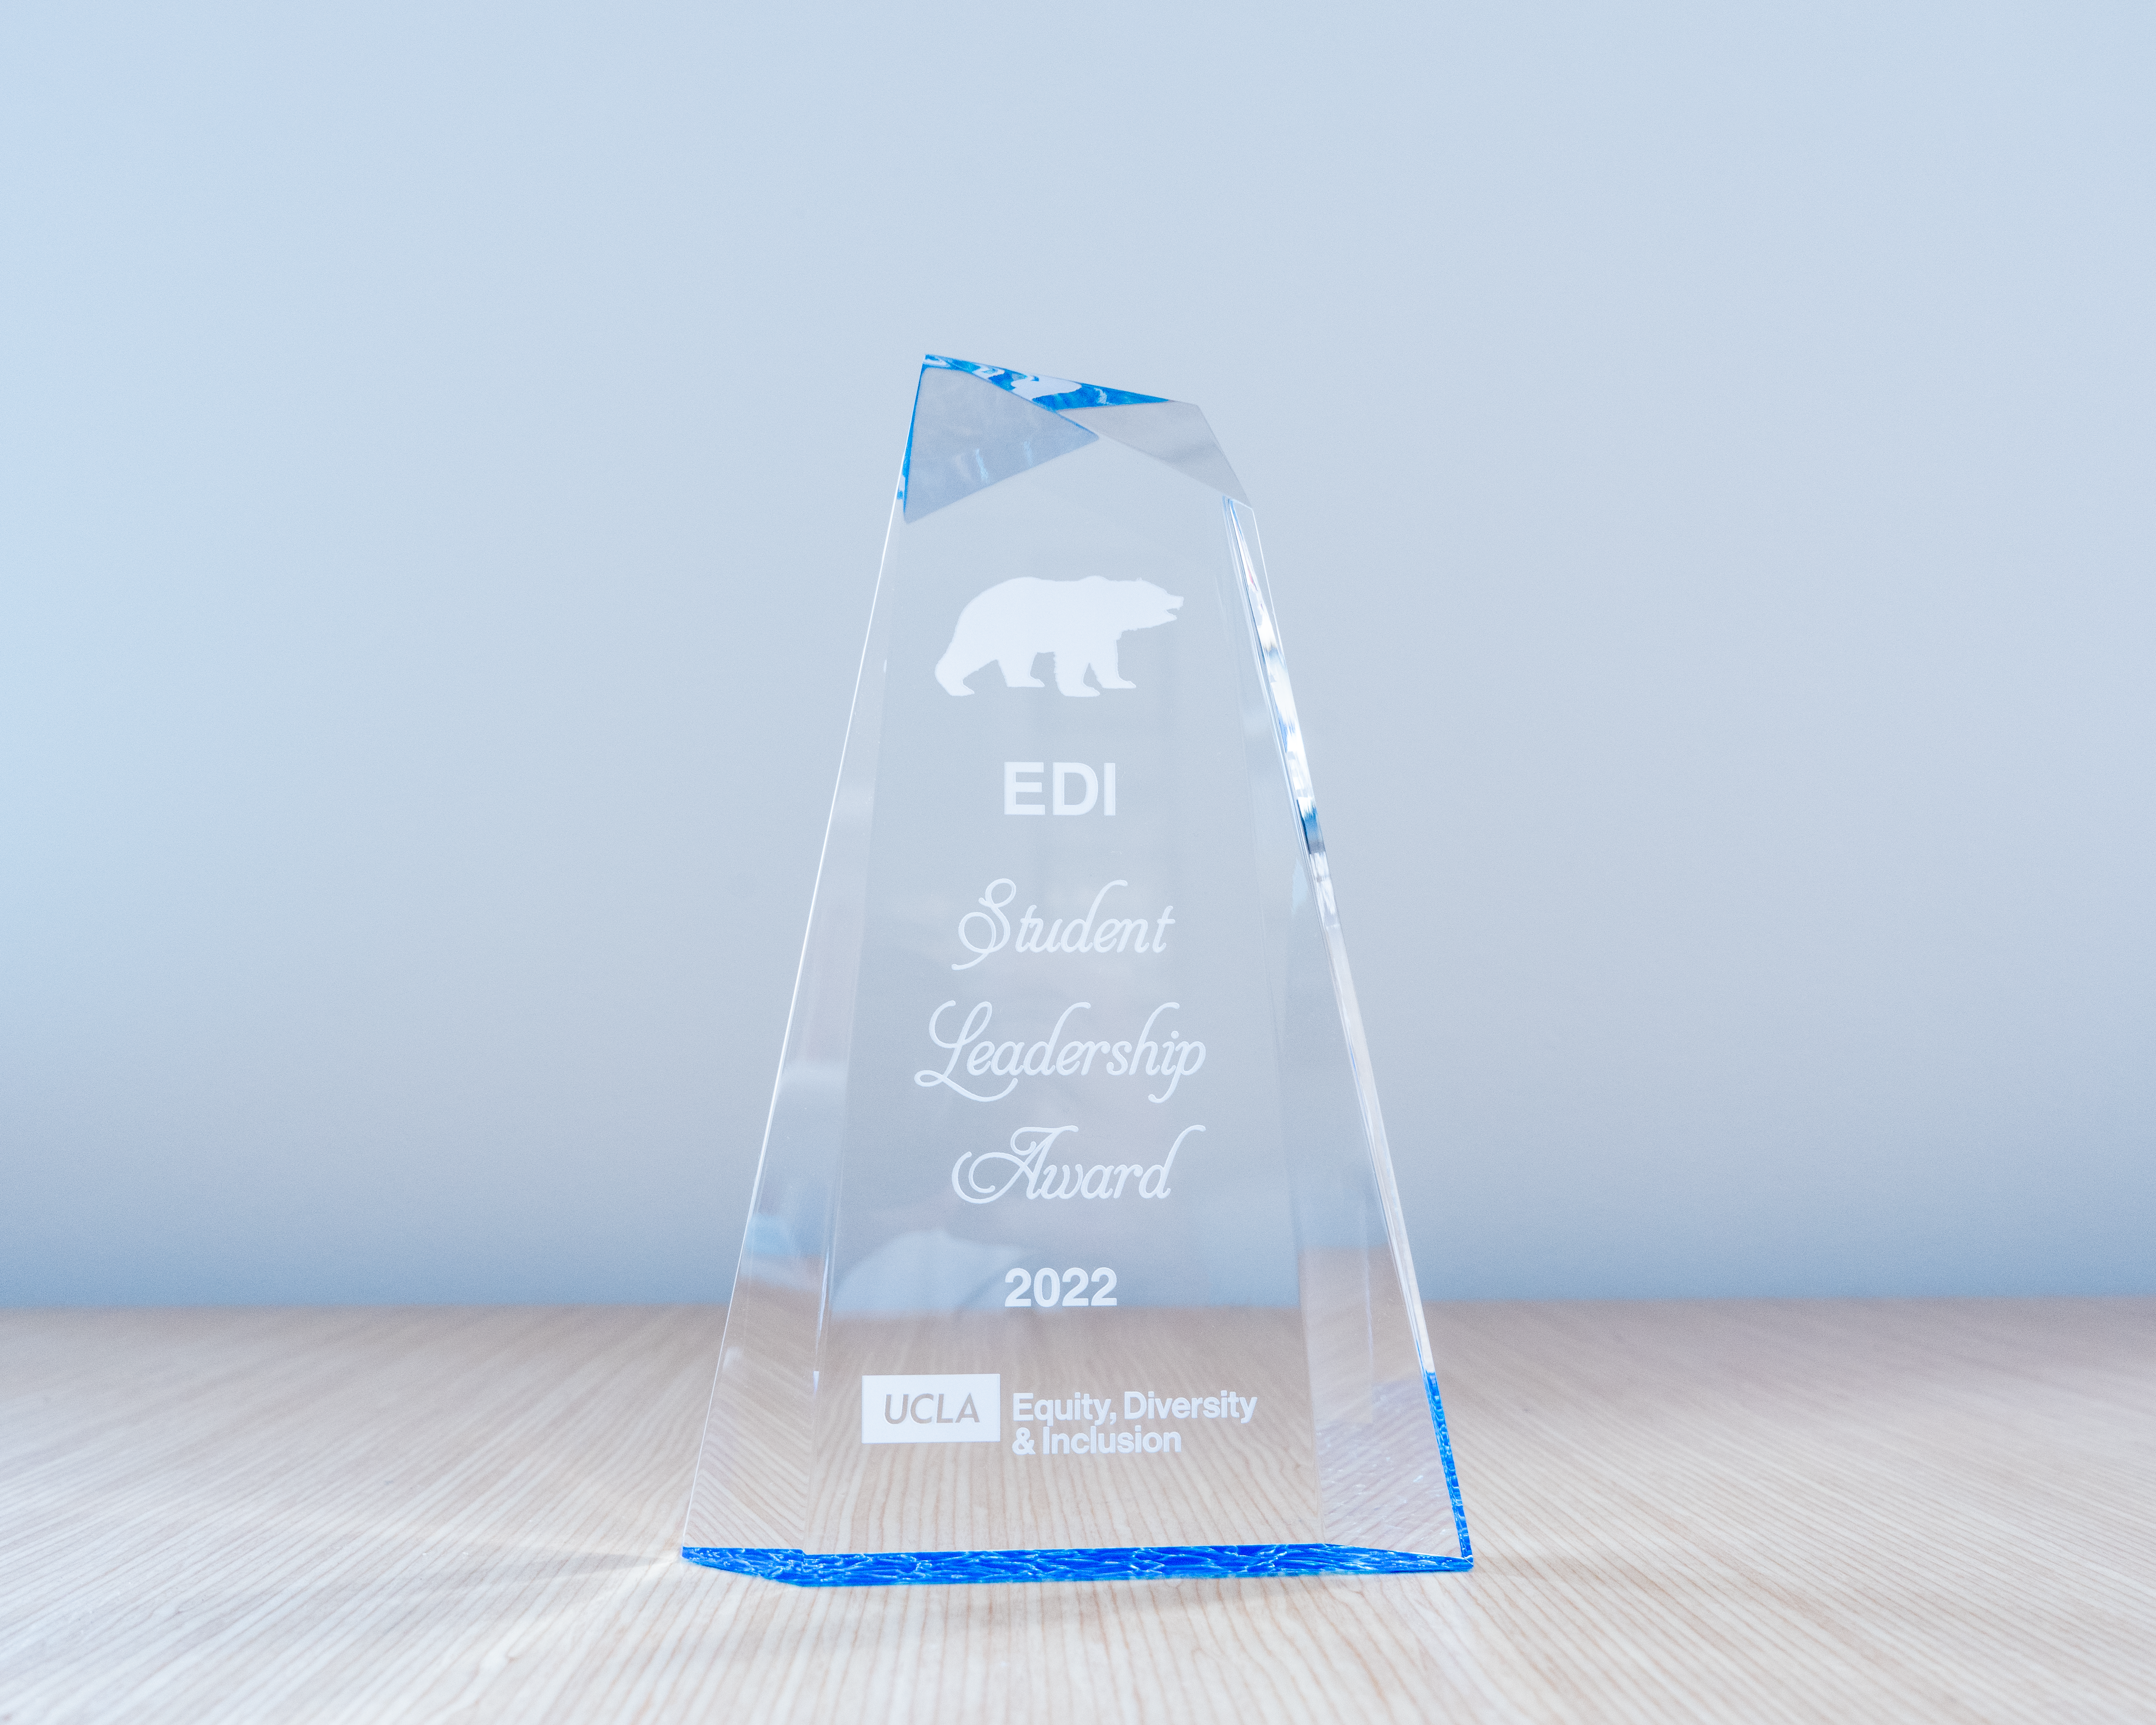 edi student leadership award trophy